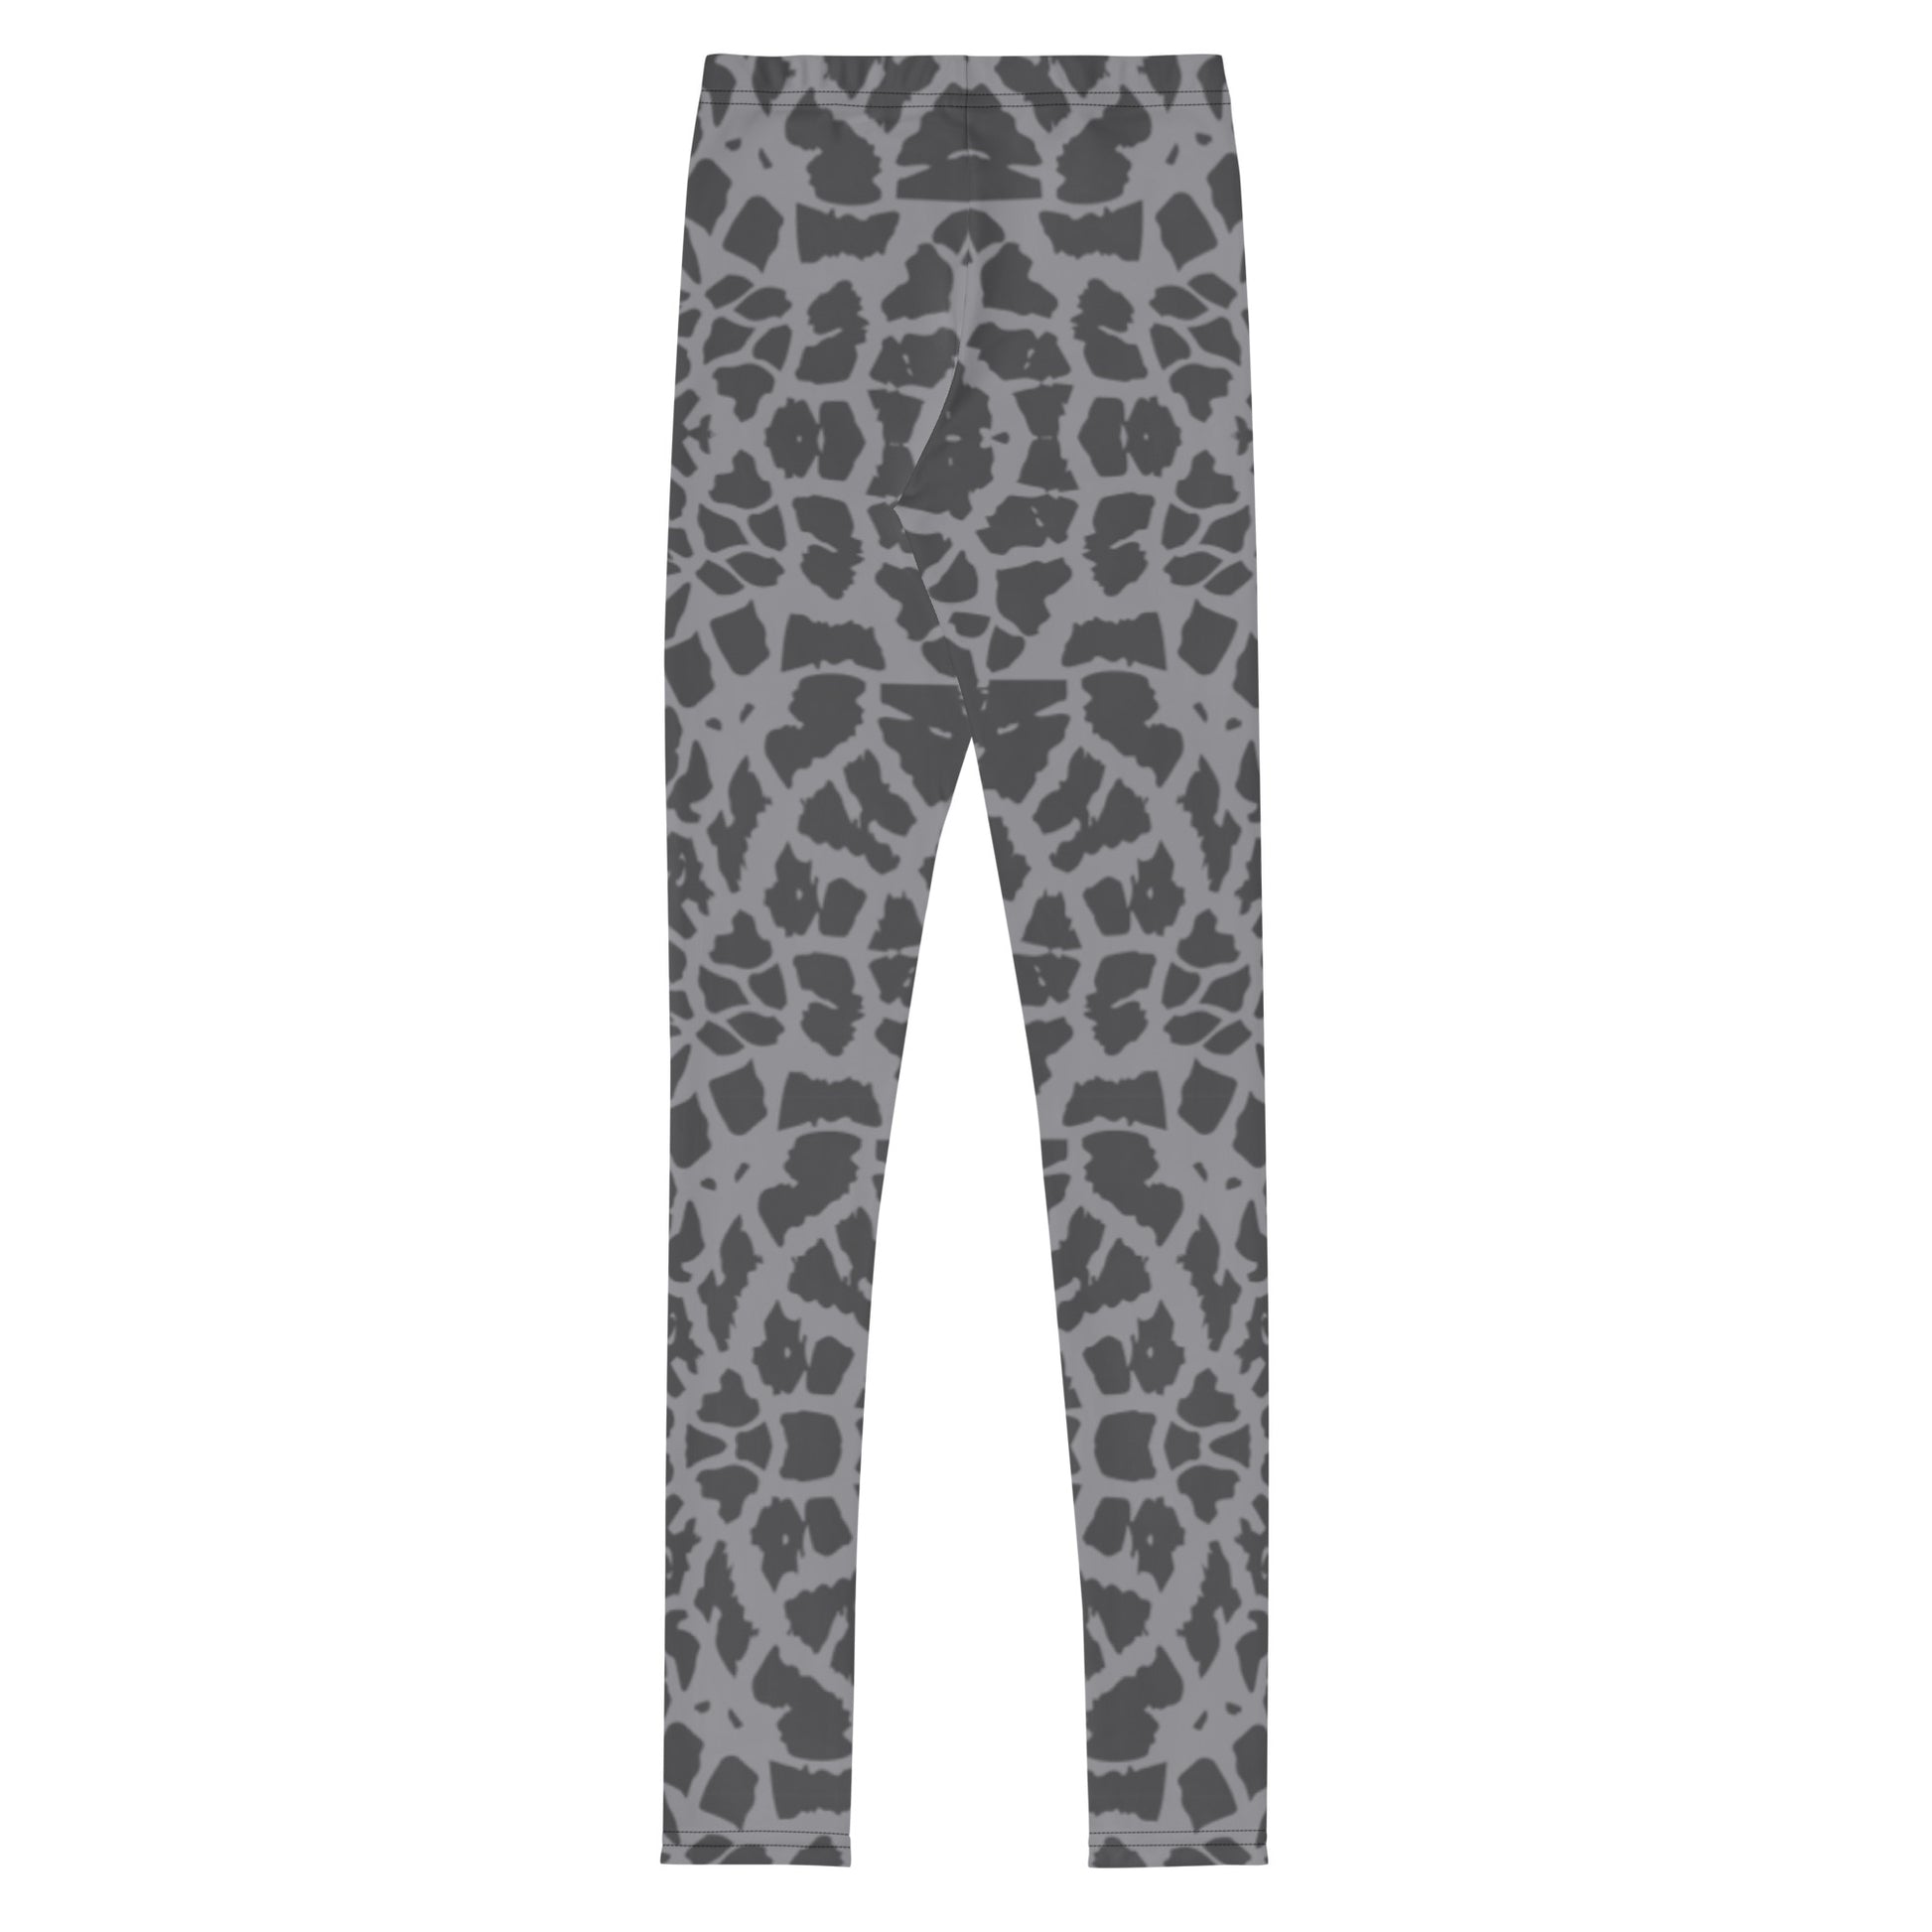 Trendy Giraffe Skin Youth Leggings (Grey & Brown) - Sport Finesse